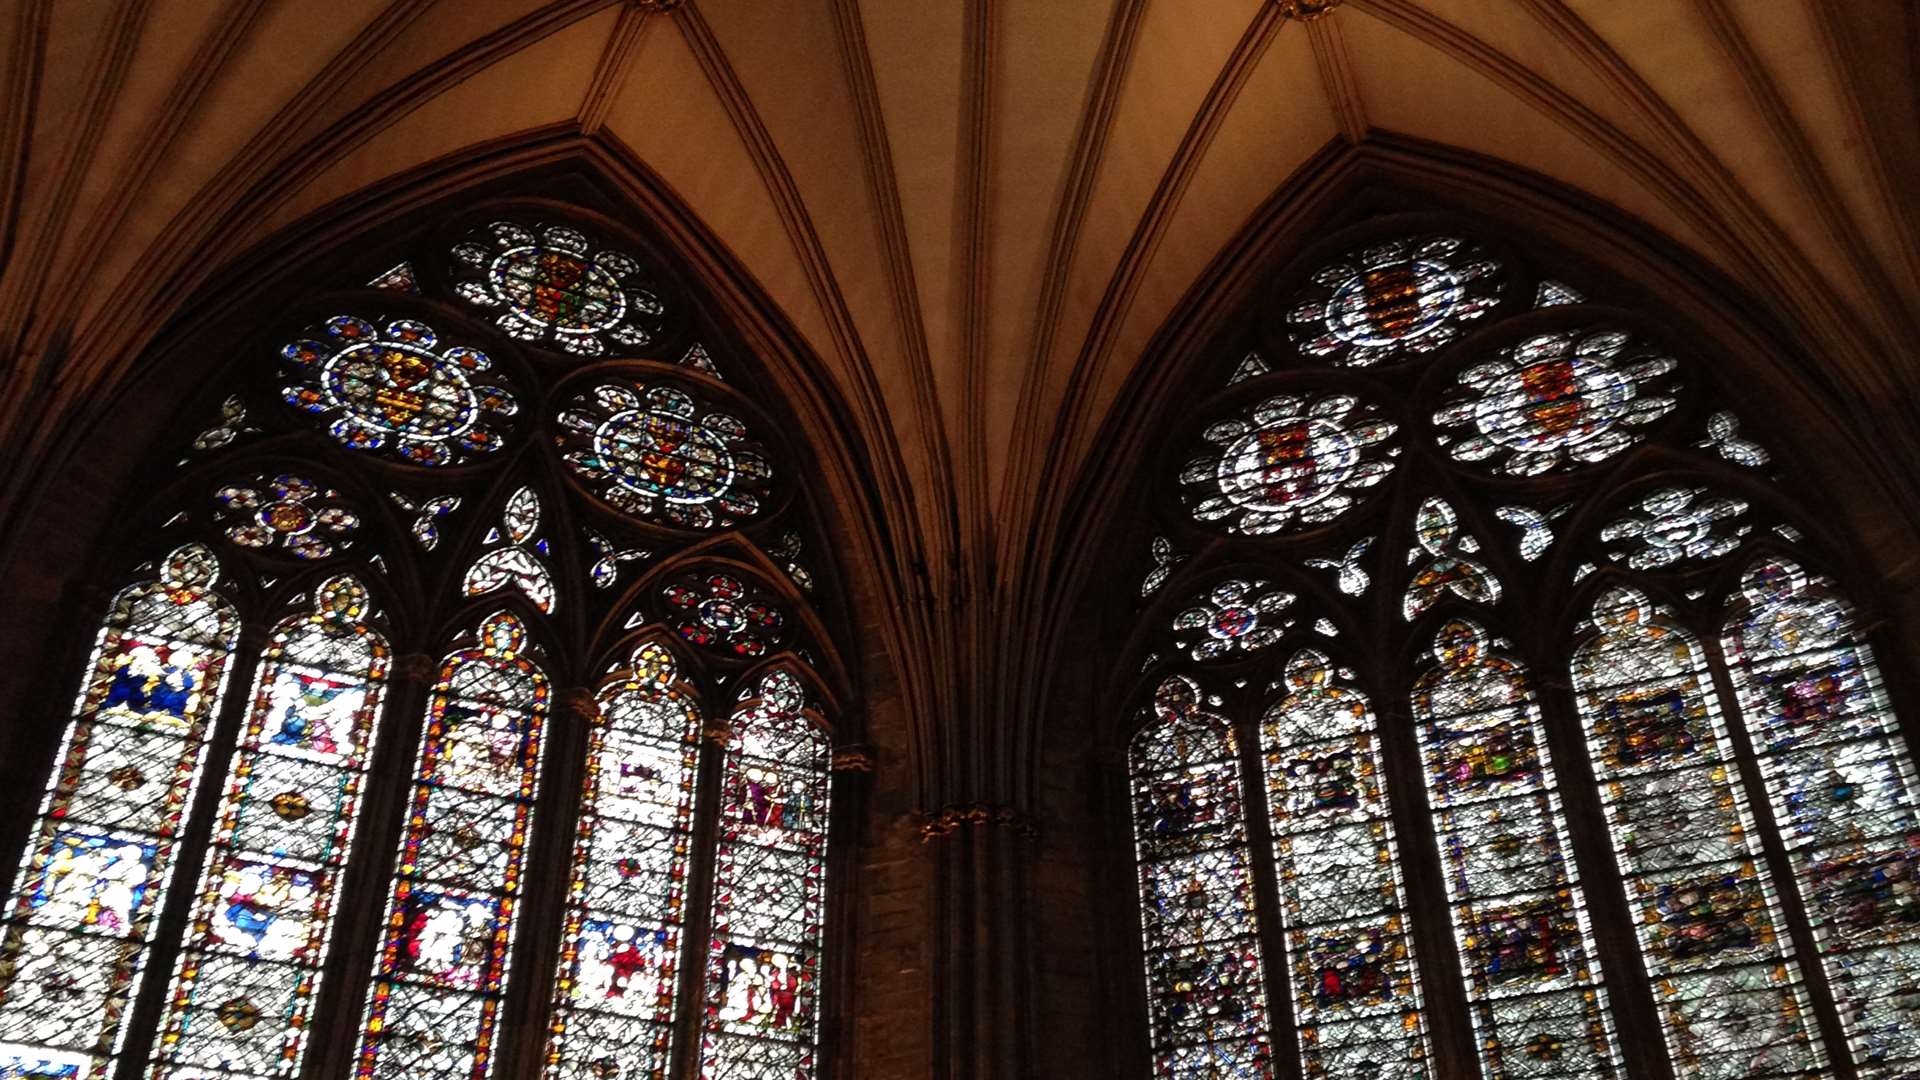 Stained glass windows inside York Minster.